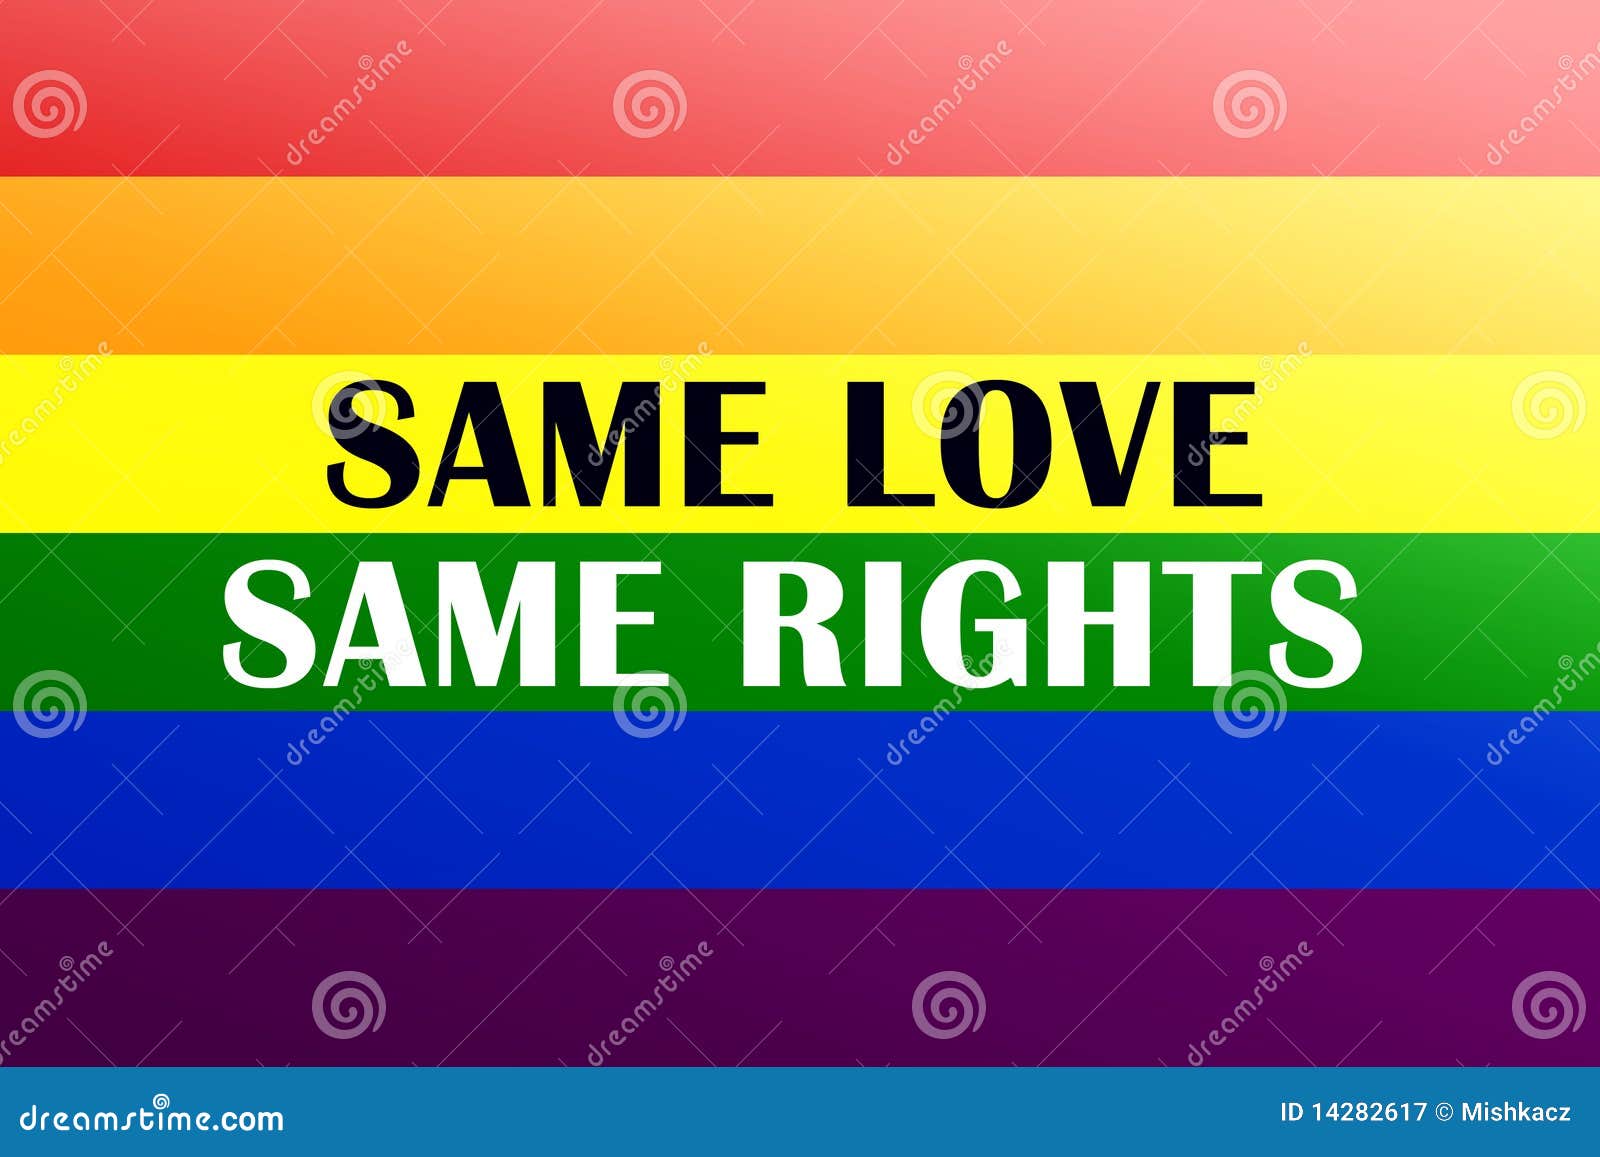 same-love-same-rights-14282617.jpg